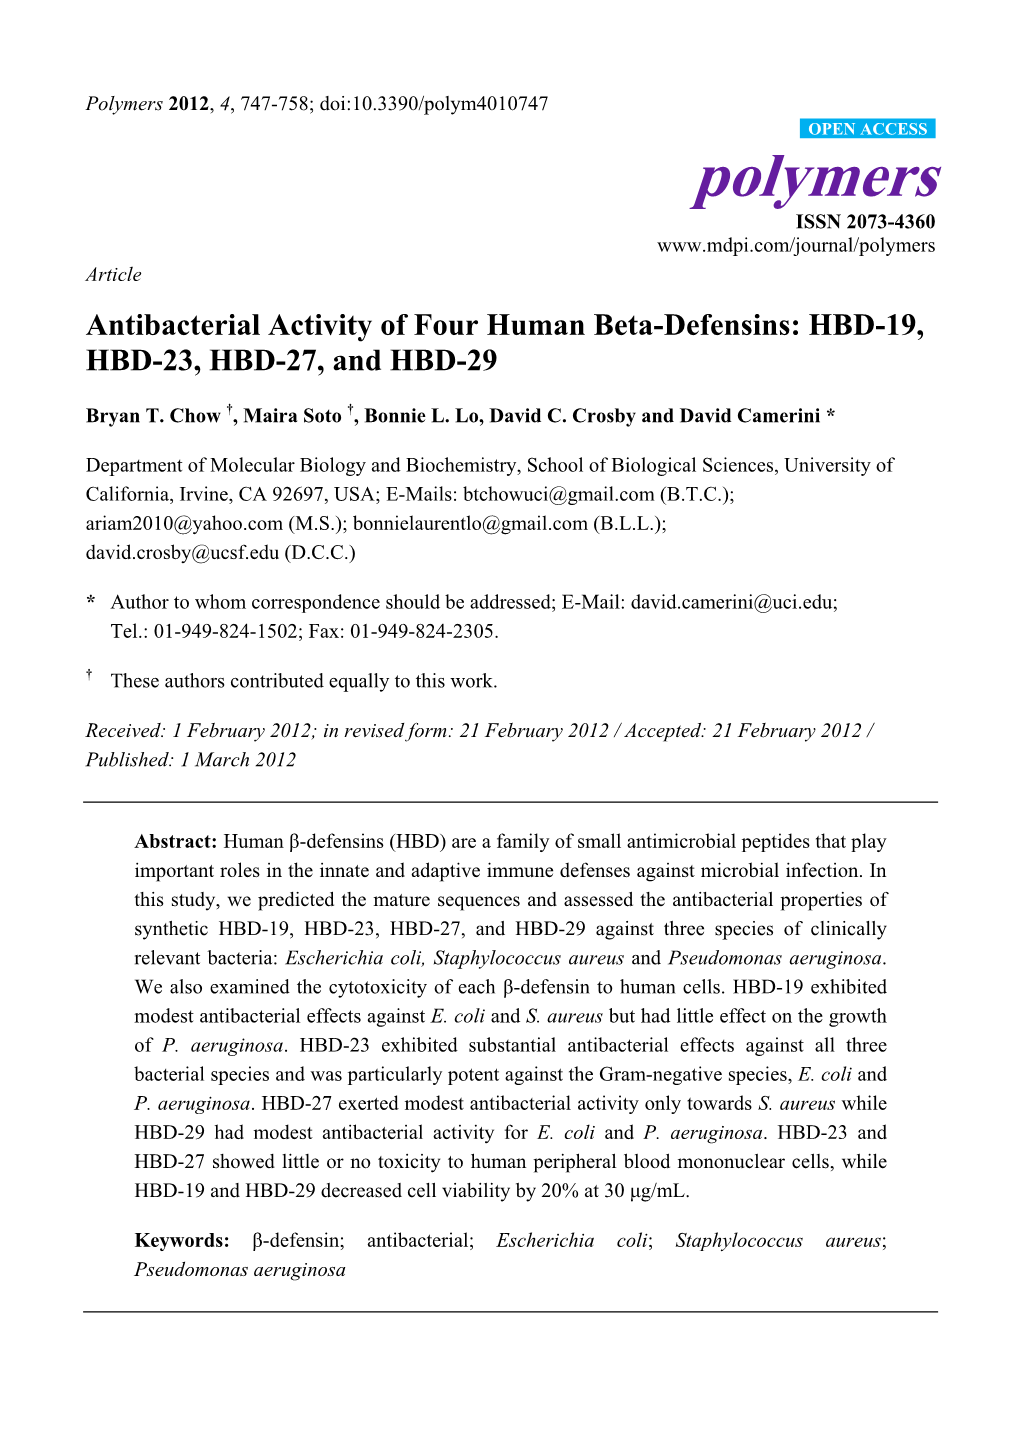 Antibacterial Activity of Four Human Beta-Defensins: HBD-19, HBD-23, HBD-27, and HBD-29